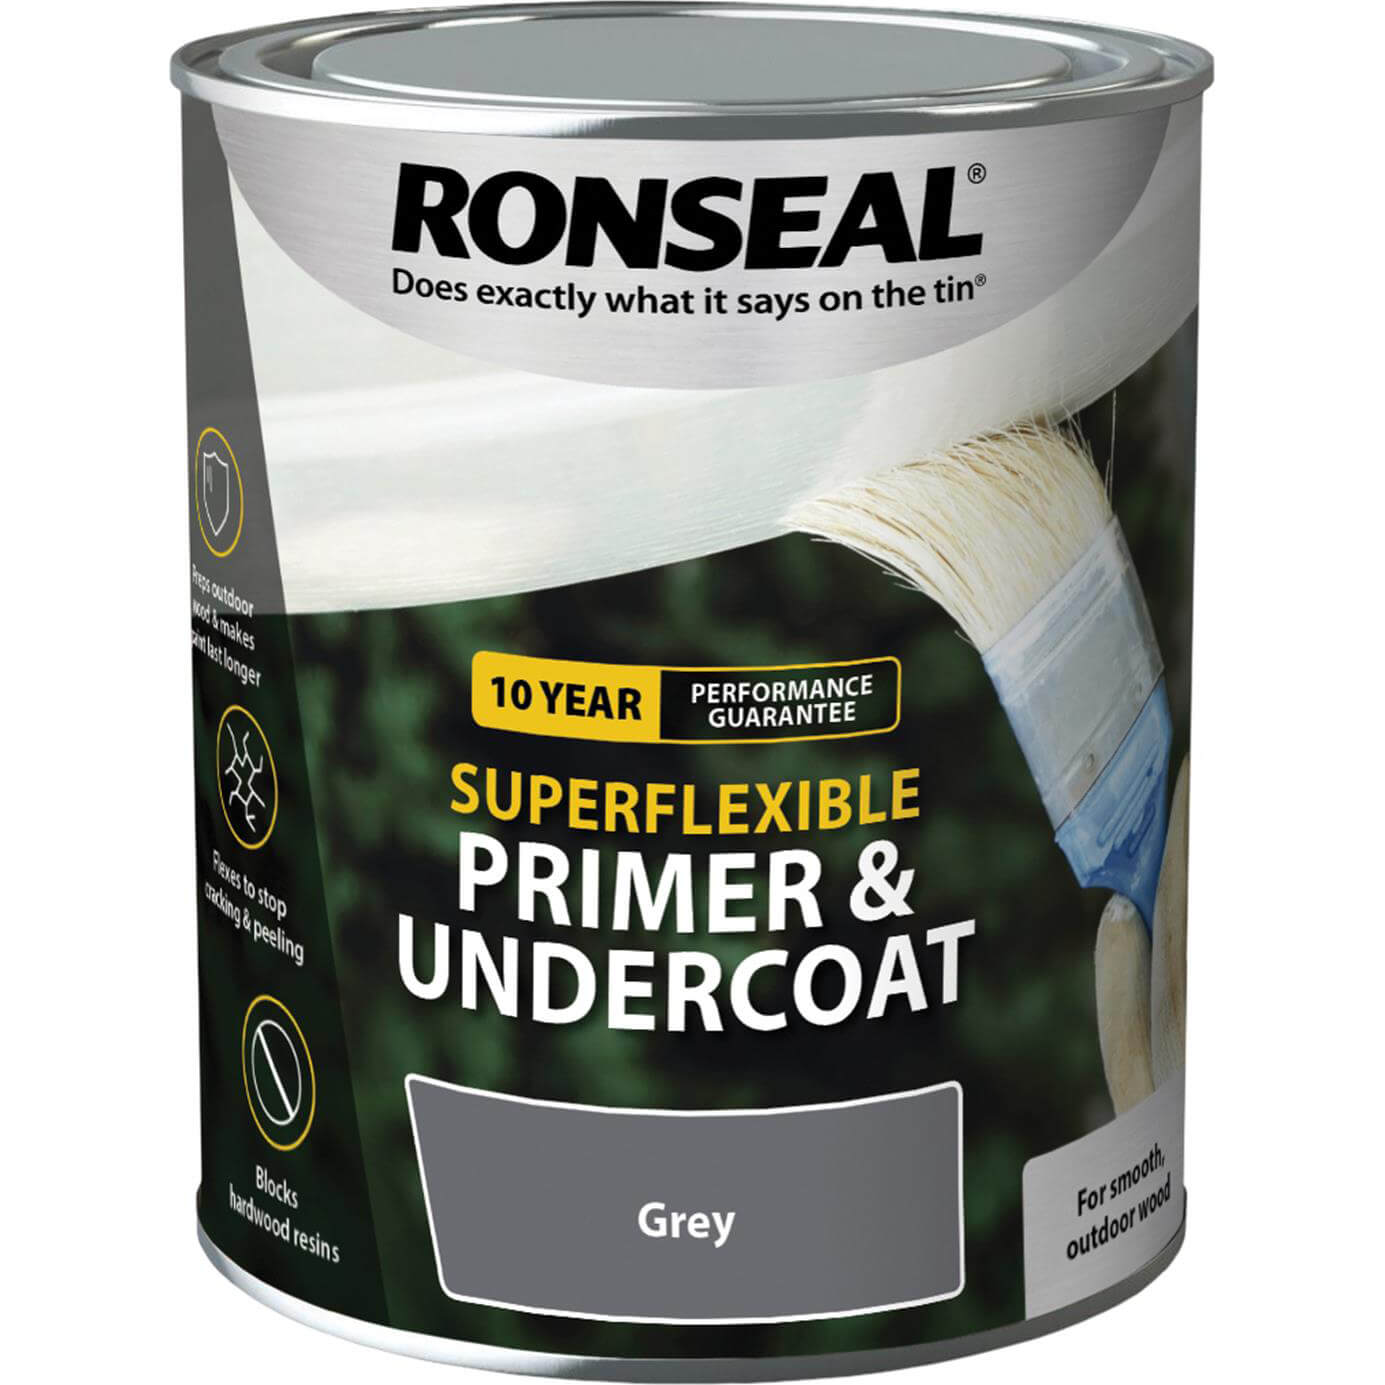 Ronseal Super Flexible Wood Primer and Undercoat Grey 750ml